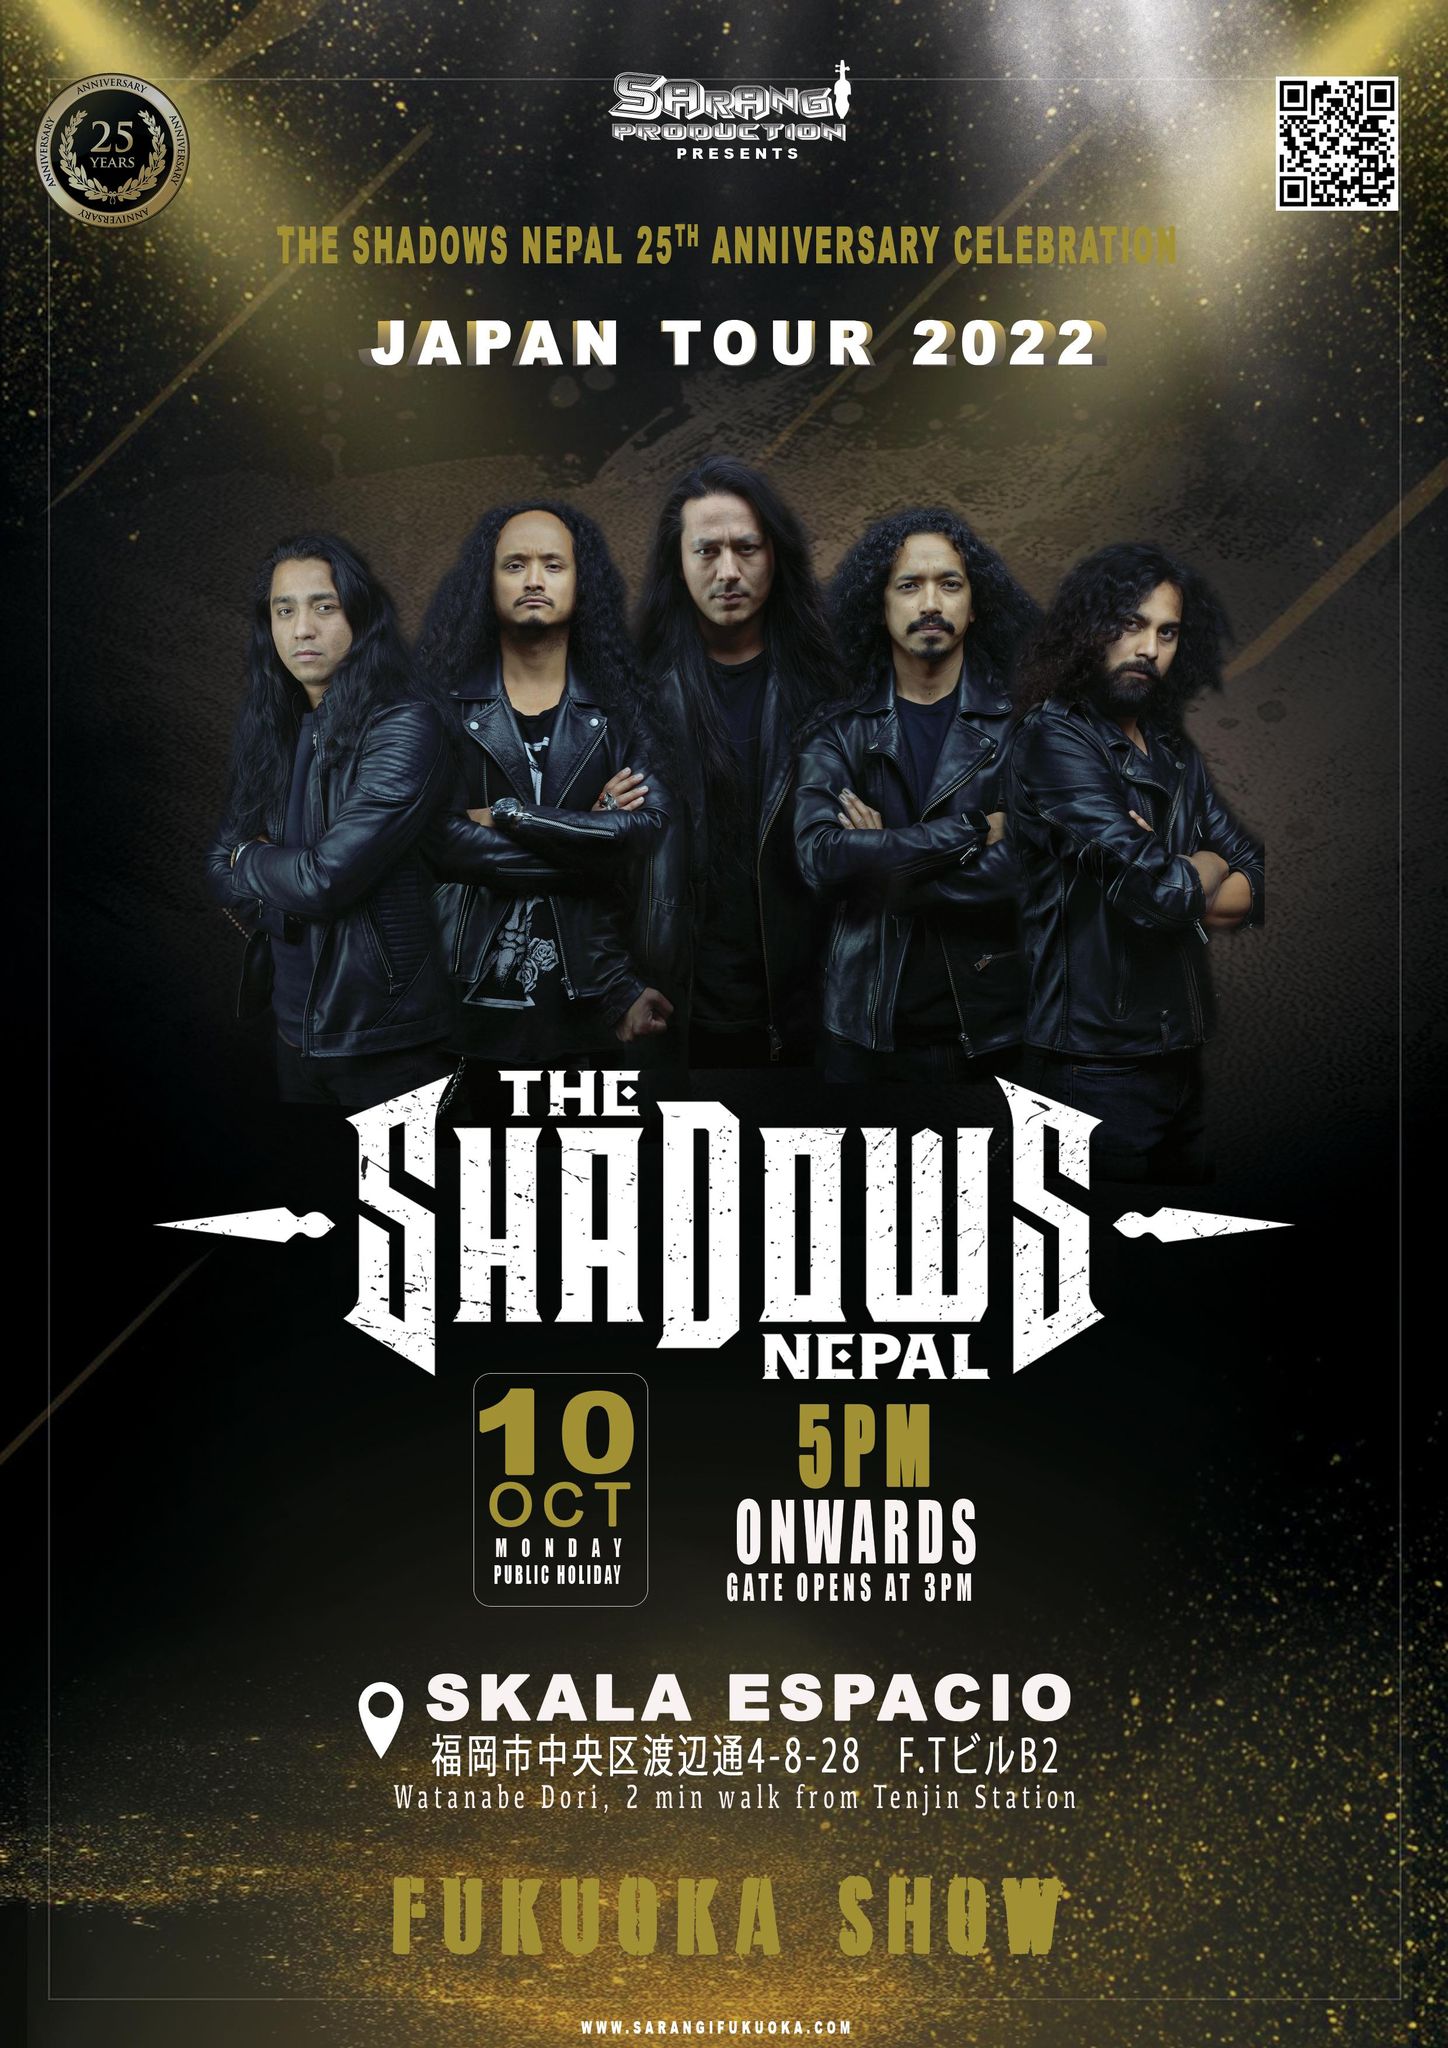 “The Shadows ‘Nepal’ Japan Tour 2022”